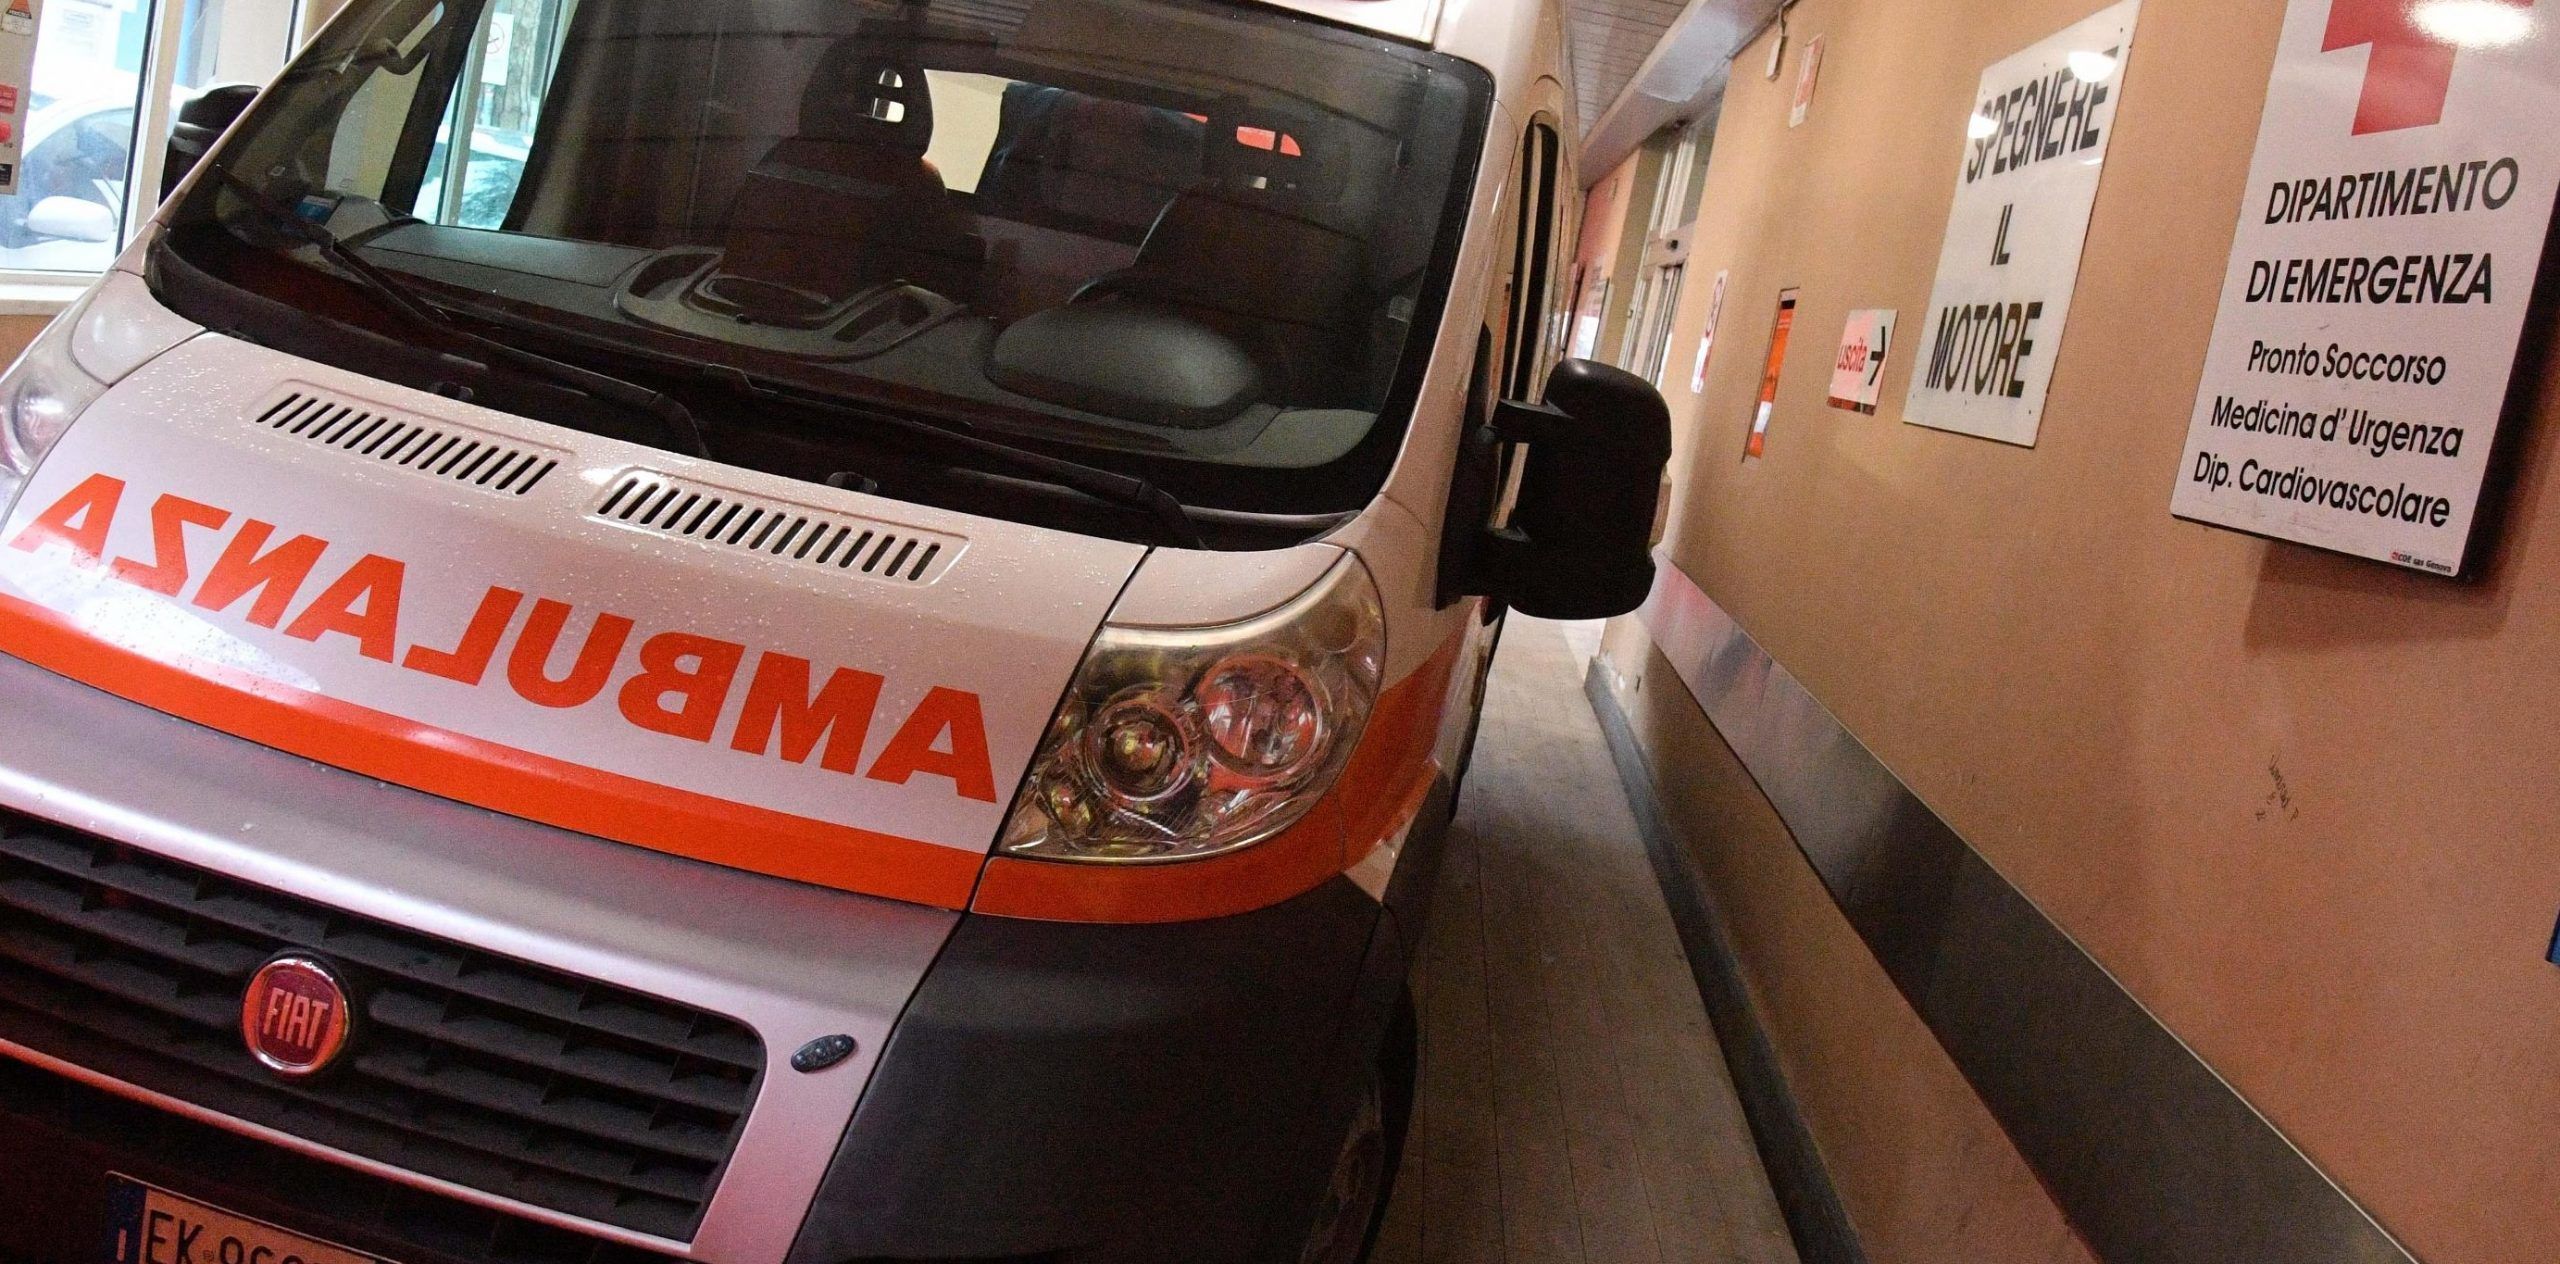 Caso di meningite fulminante a Vicenza: uomo di 38 anni in fin di vita